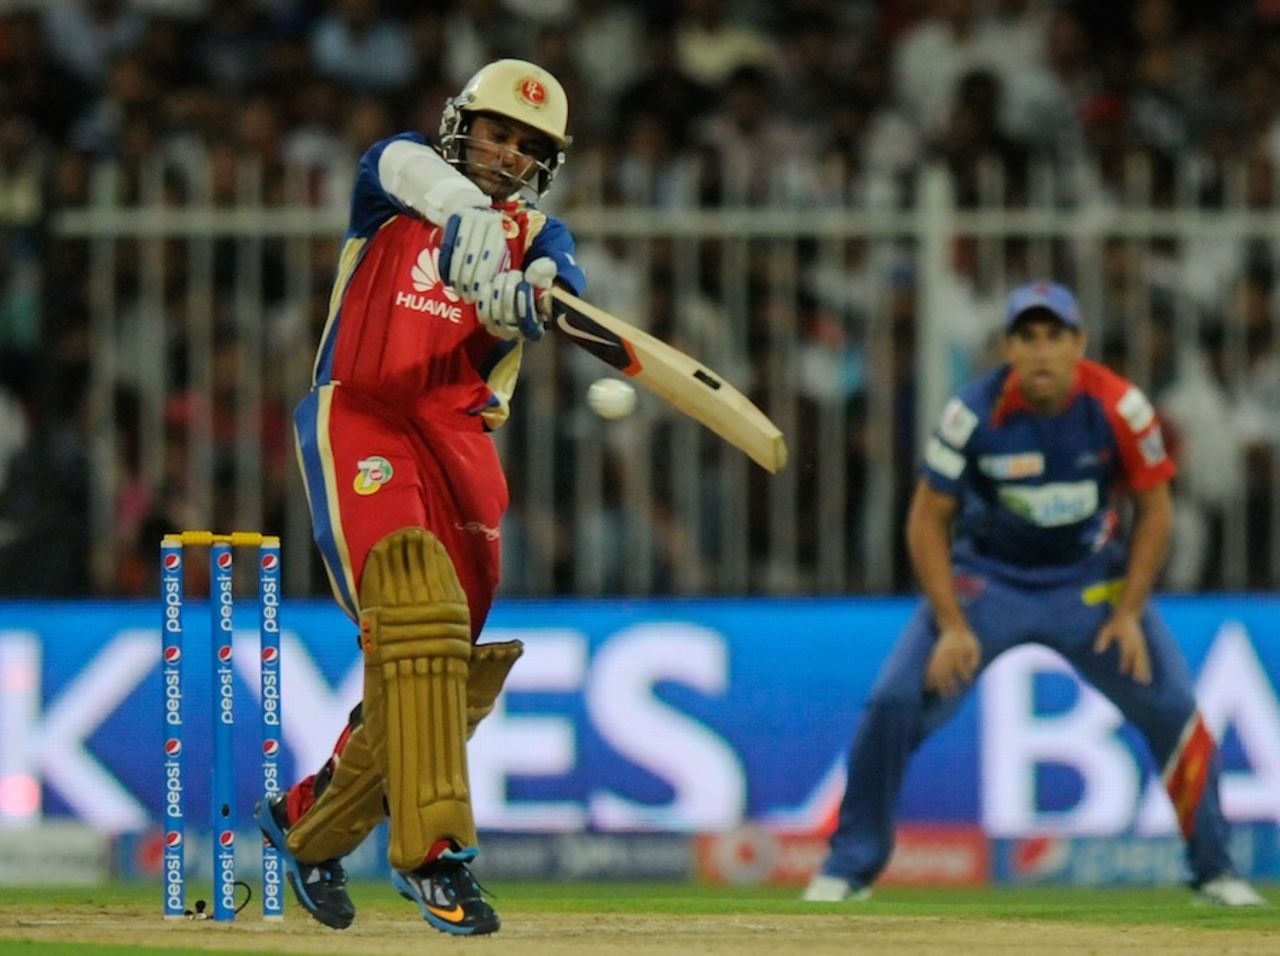 Parthiv Patel pulls during a feisty innings, Royal Challengers Bangalore v Delhi Daredevils, IPL 2014, Sharjah, April 17, 2014